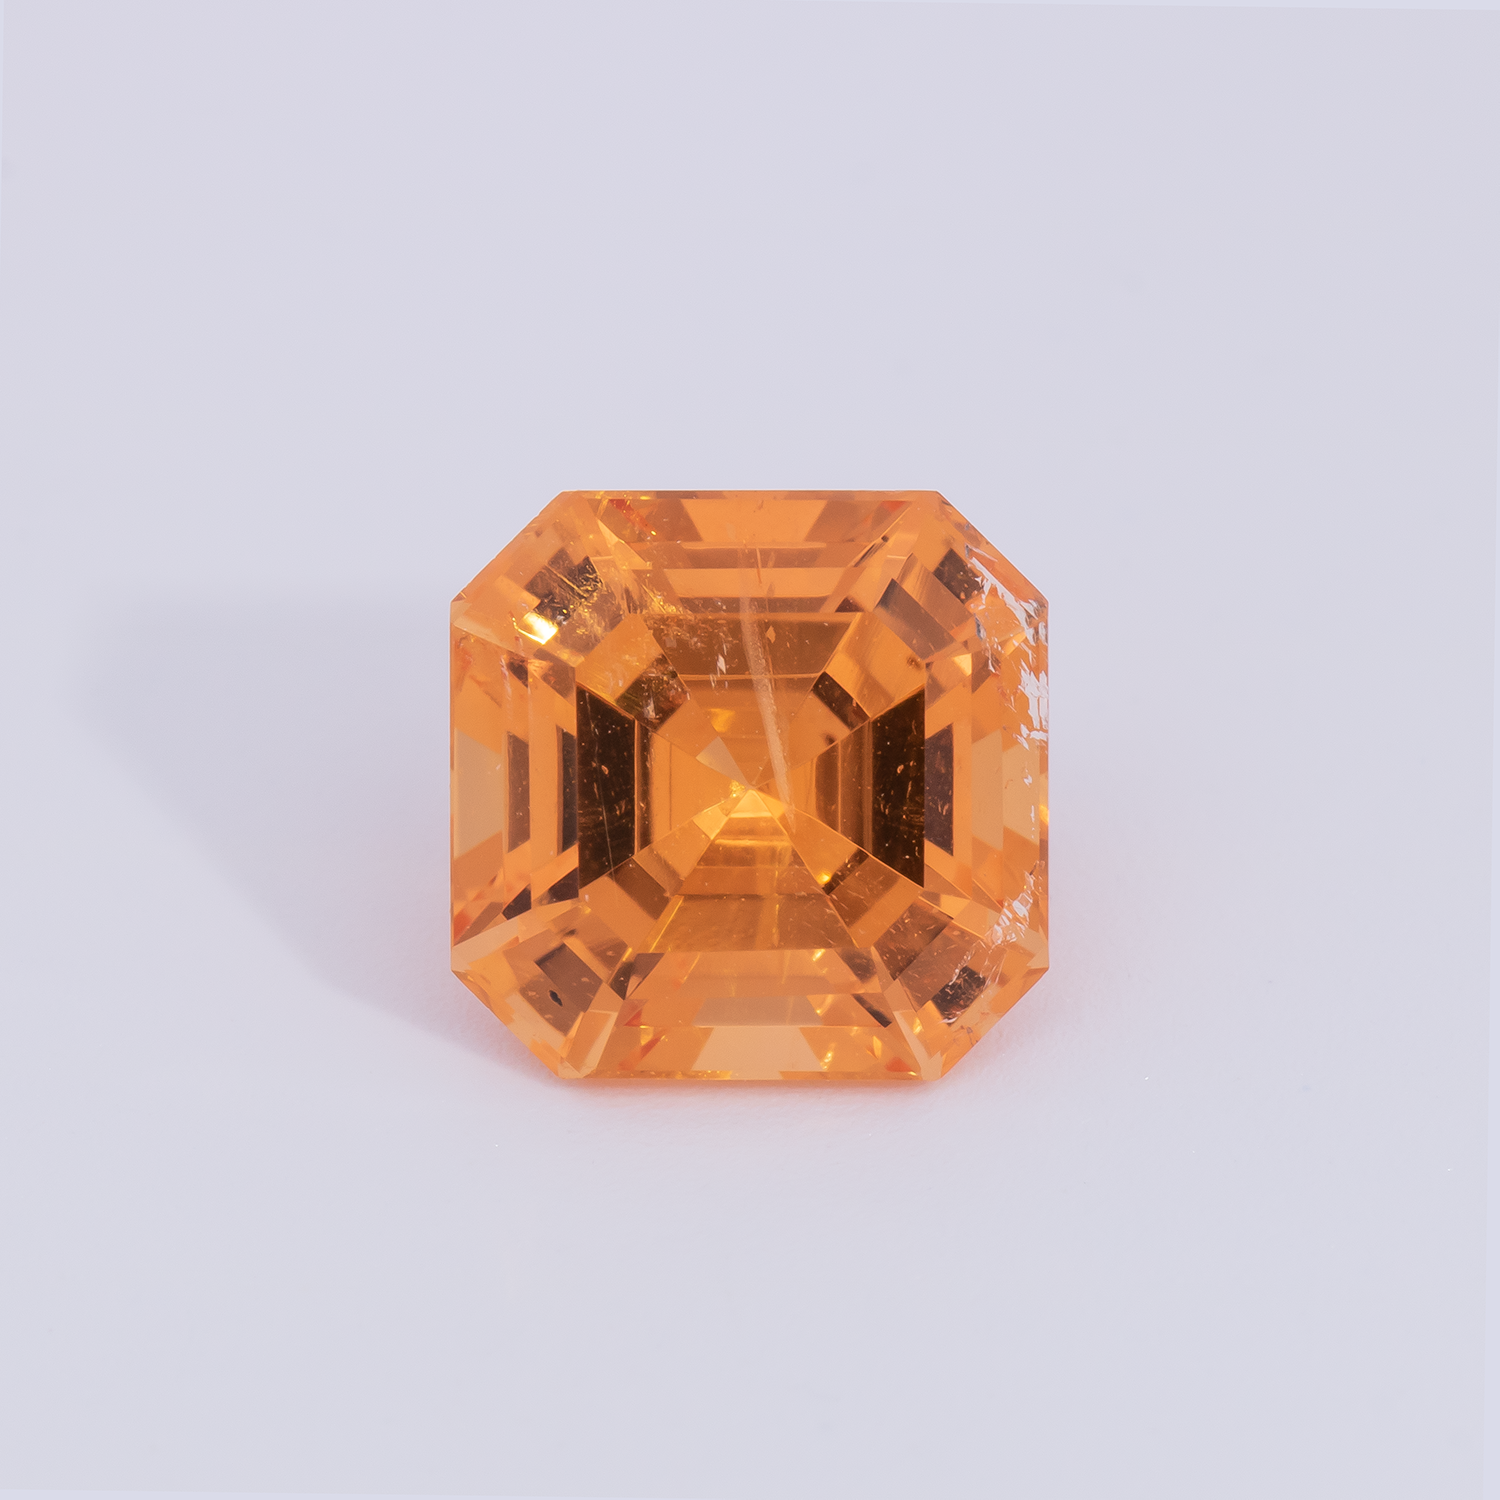 Mandarin Garnet - orange, assher, 7x7 mm, 2.03 cts, No. MG99009